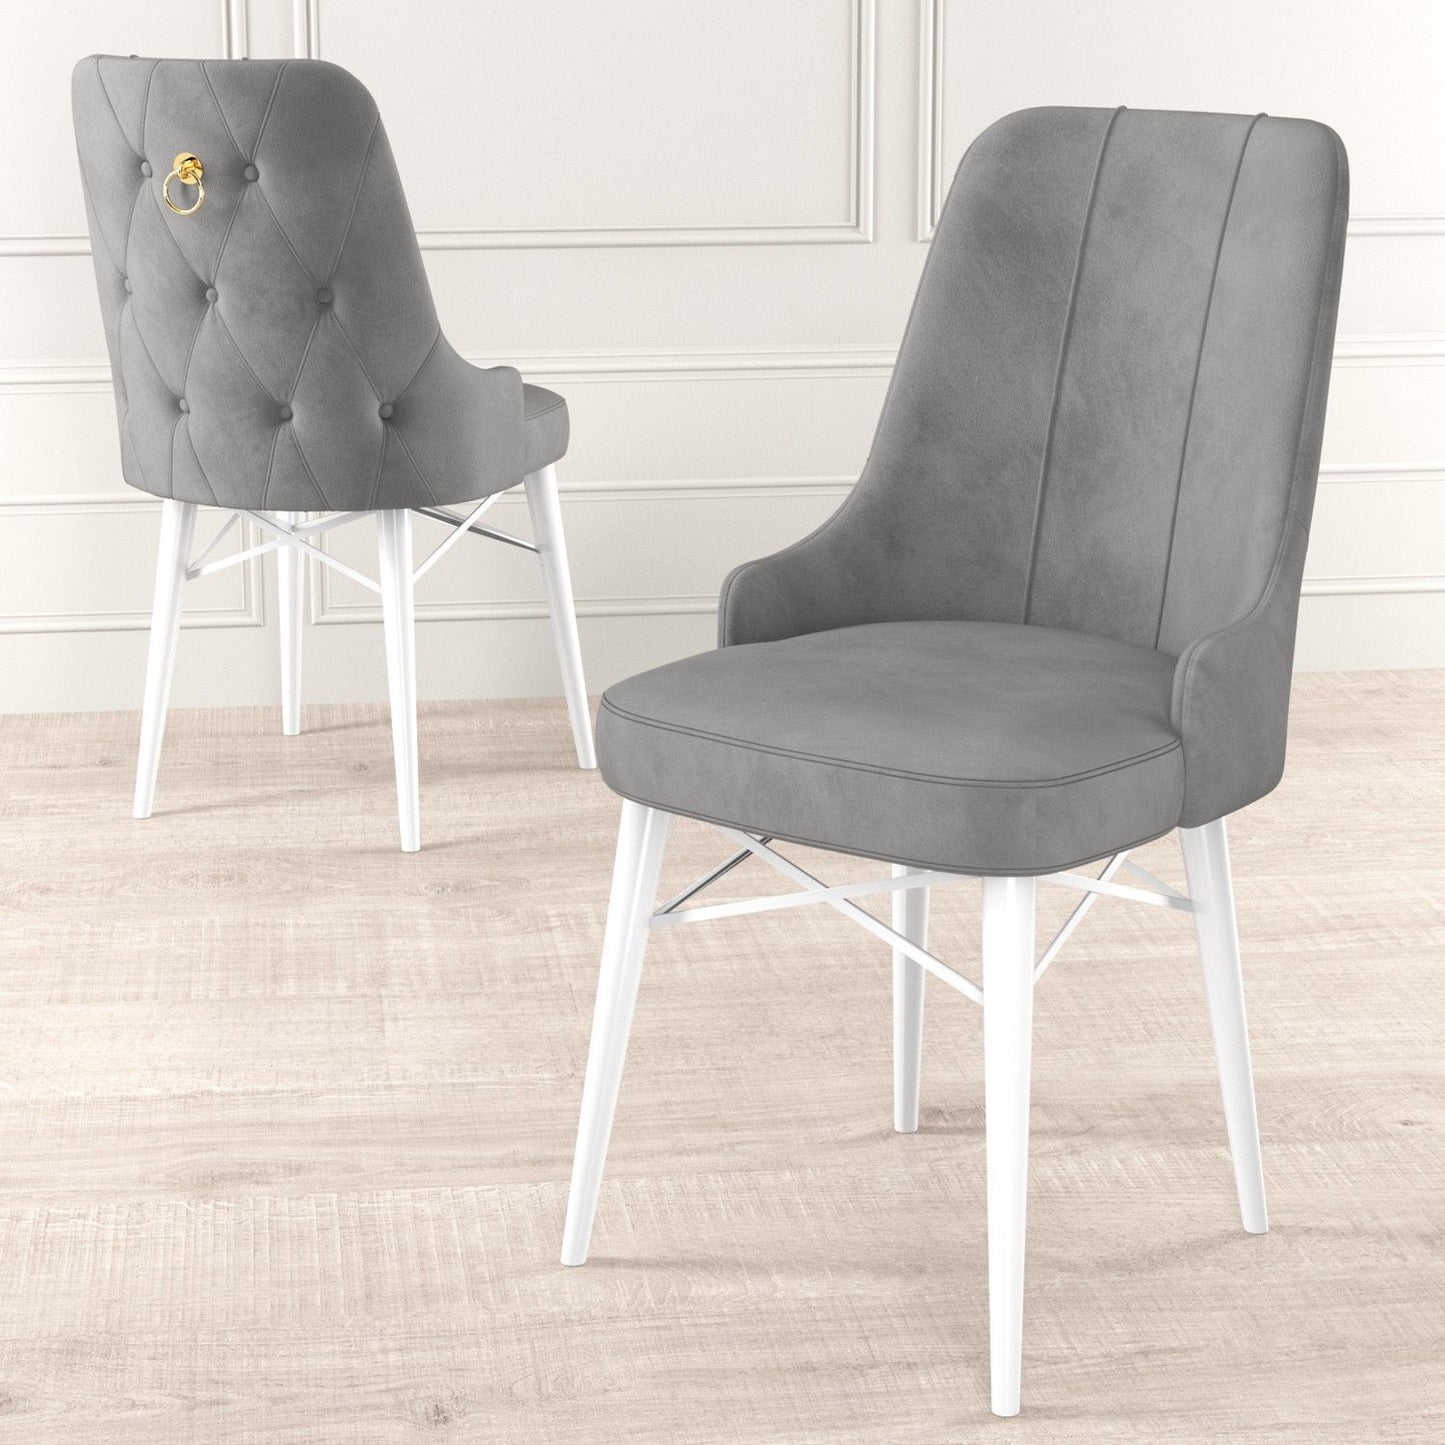 Pare - Grey, White - Chair Set (4 Pieces)